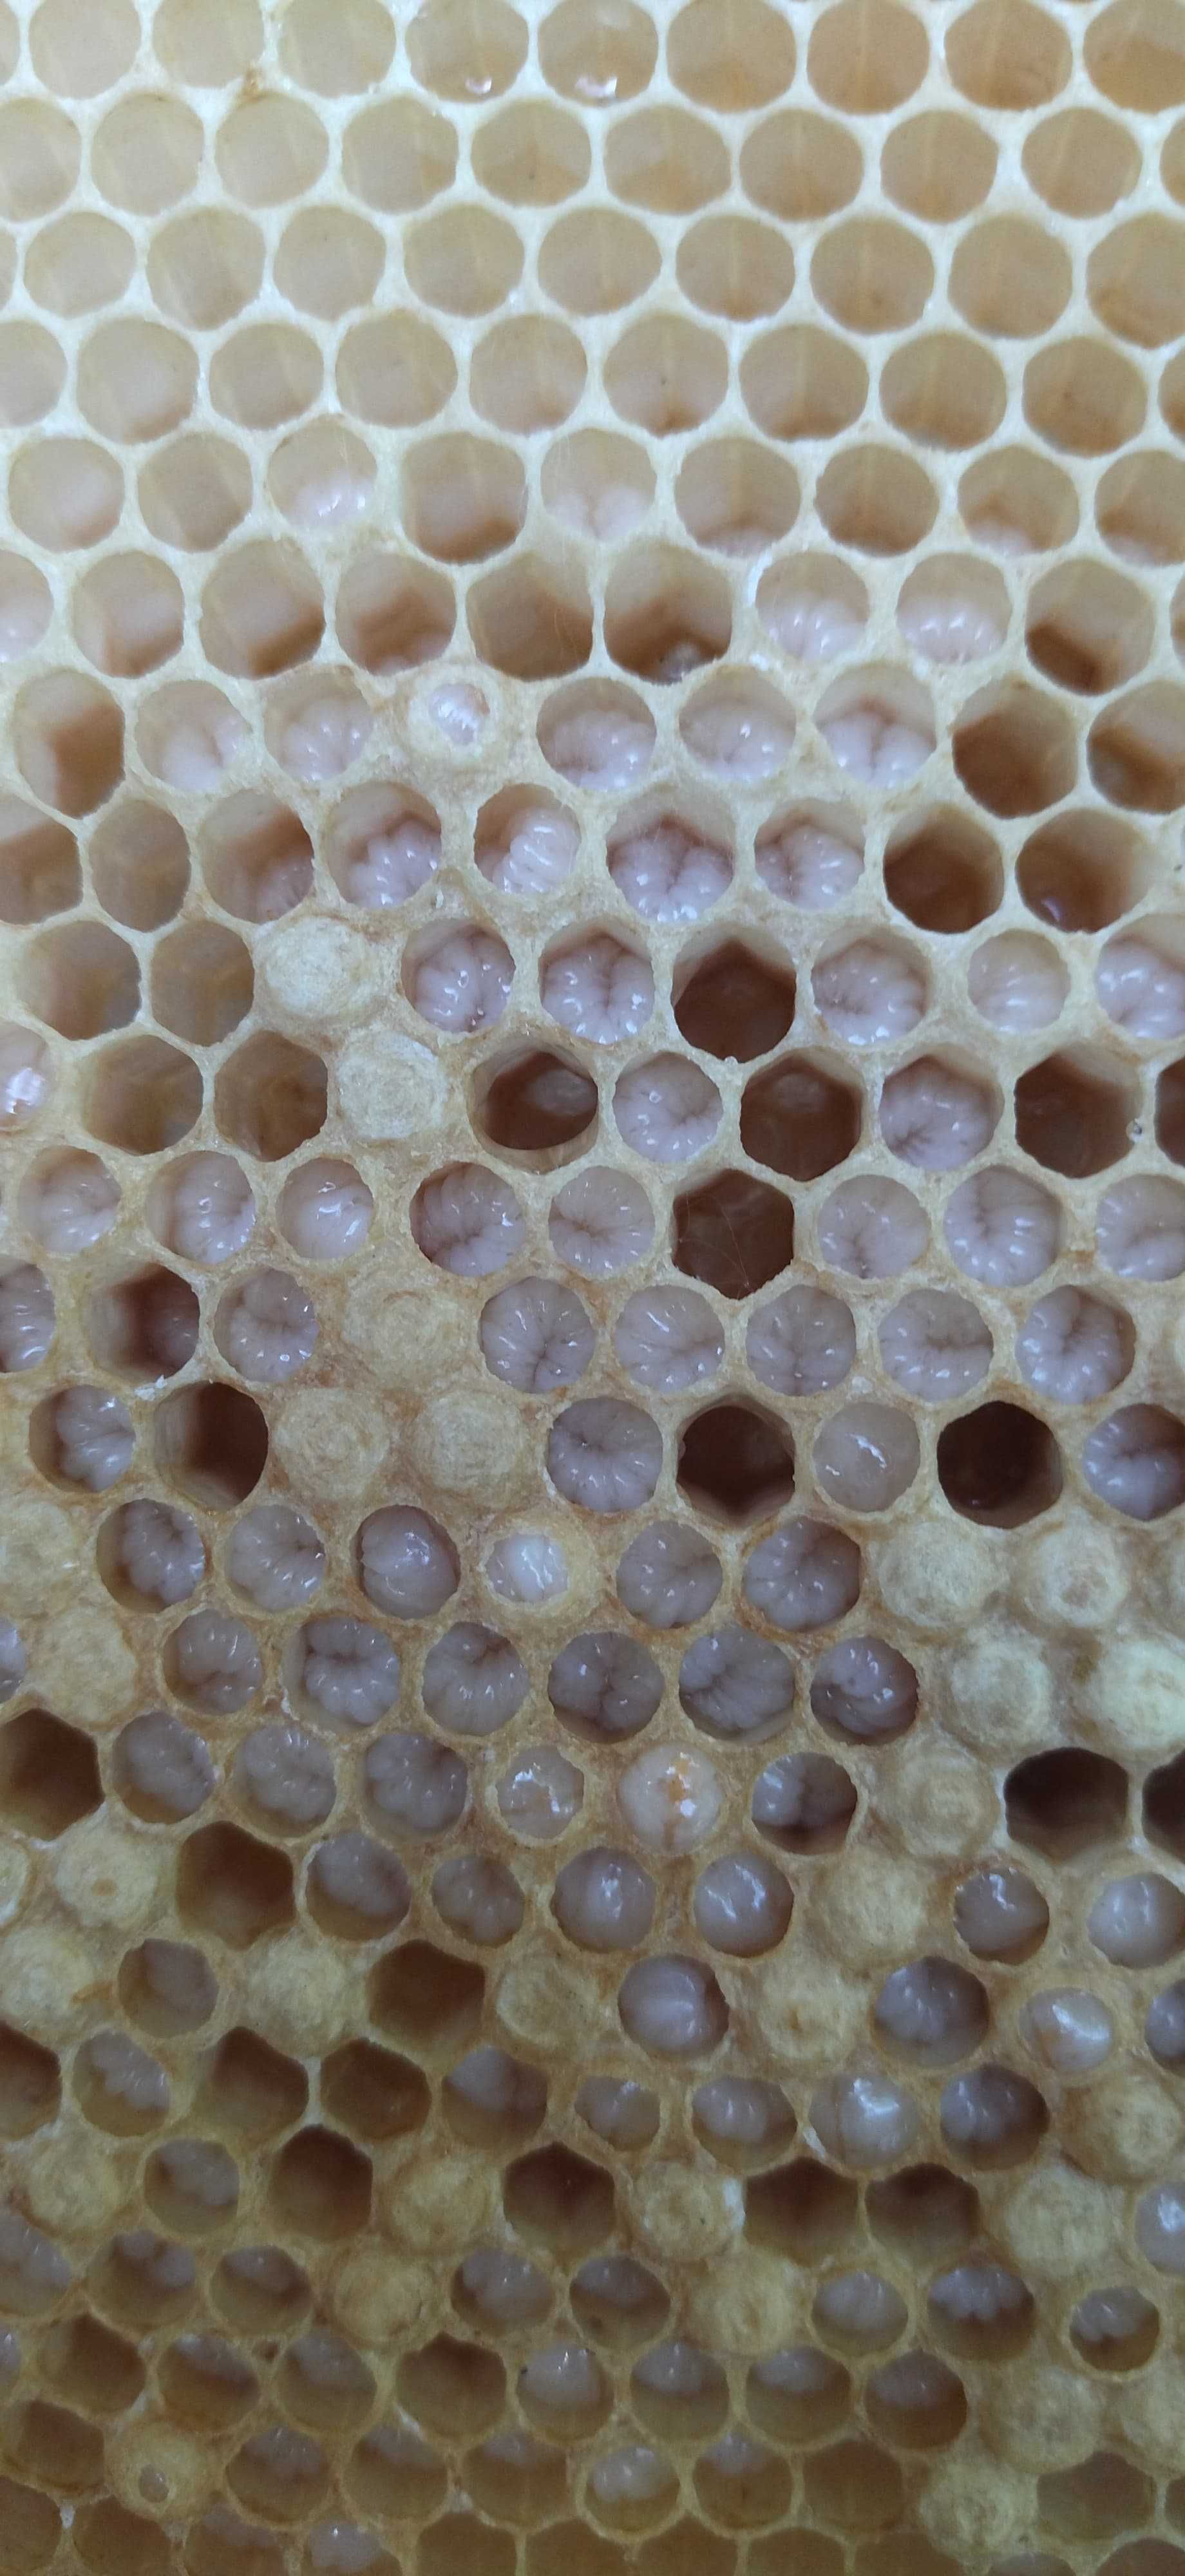 Vand Apilarnil brut si in  preparate apicole